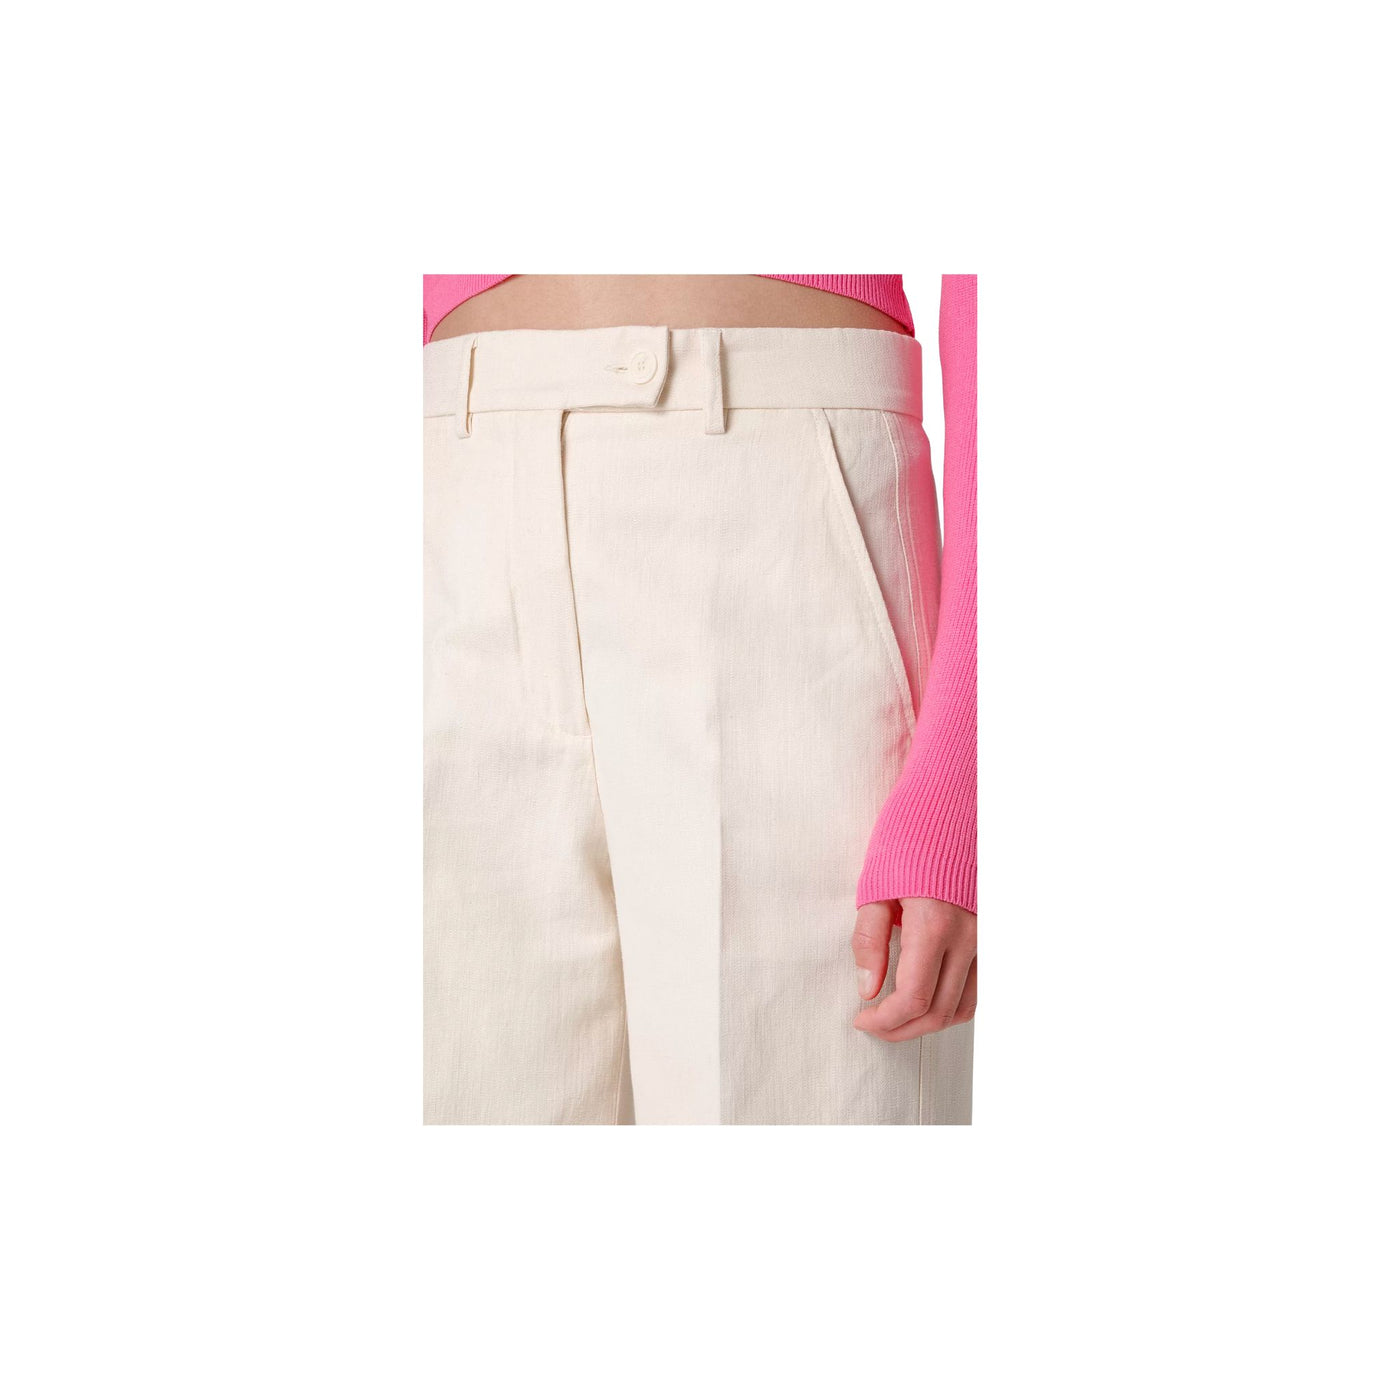 High-waisted women's trousers in malfilè fabric